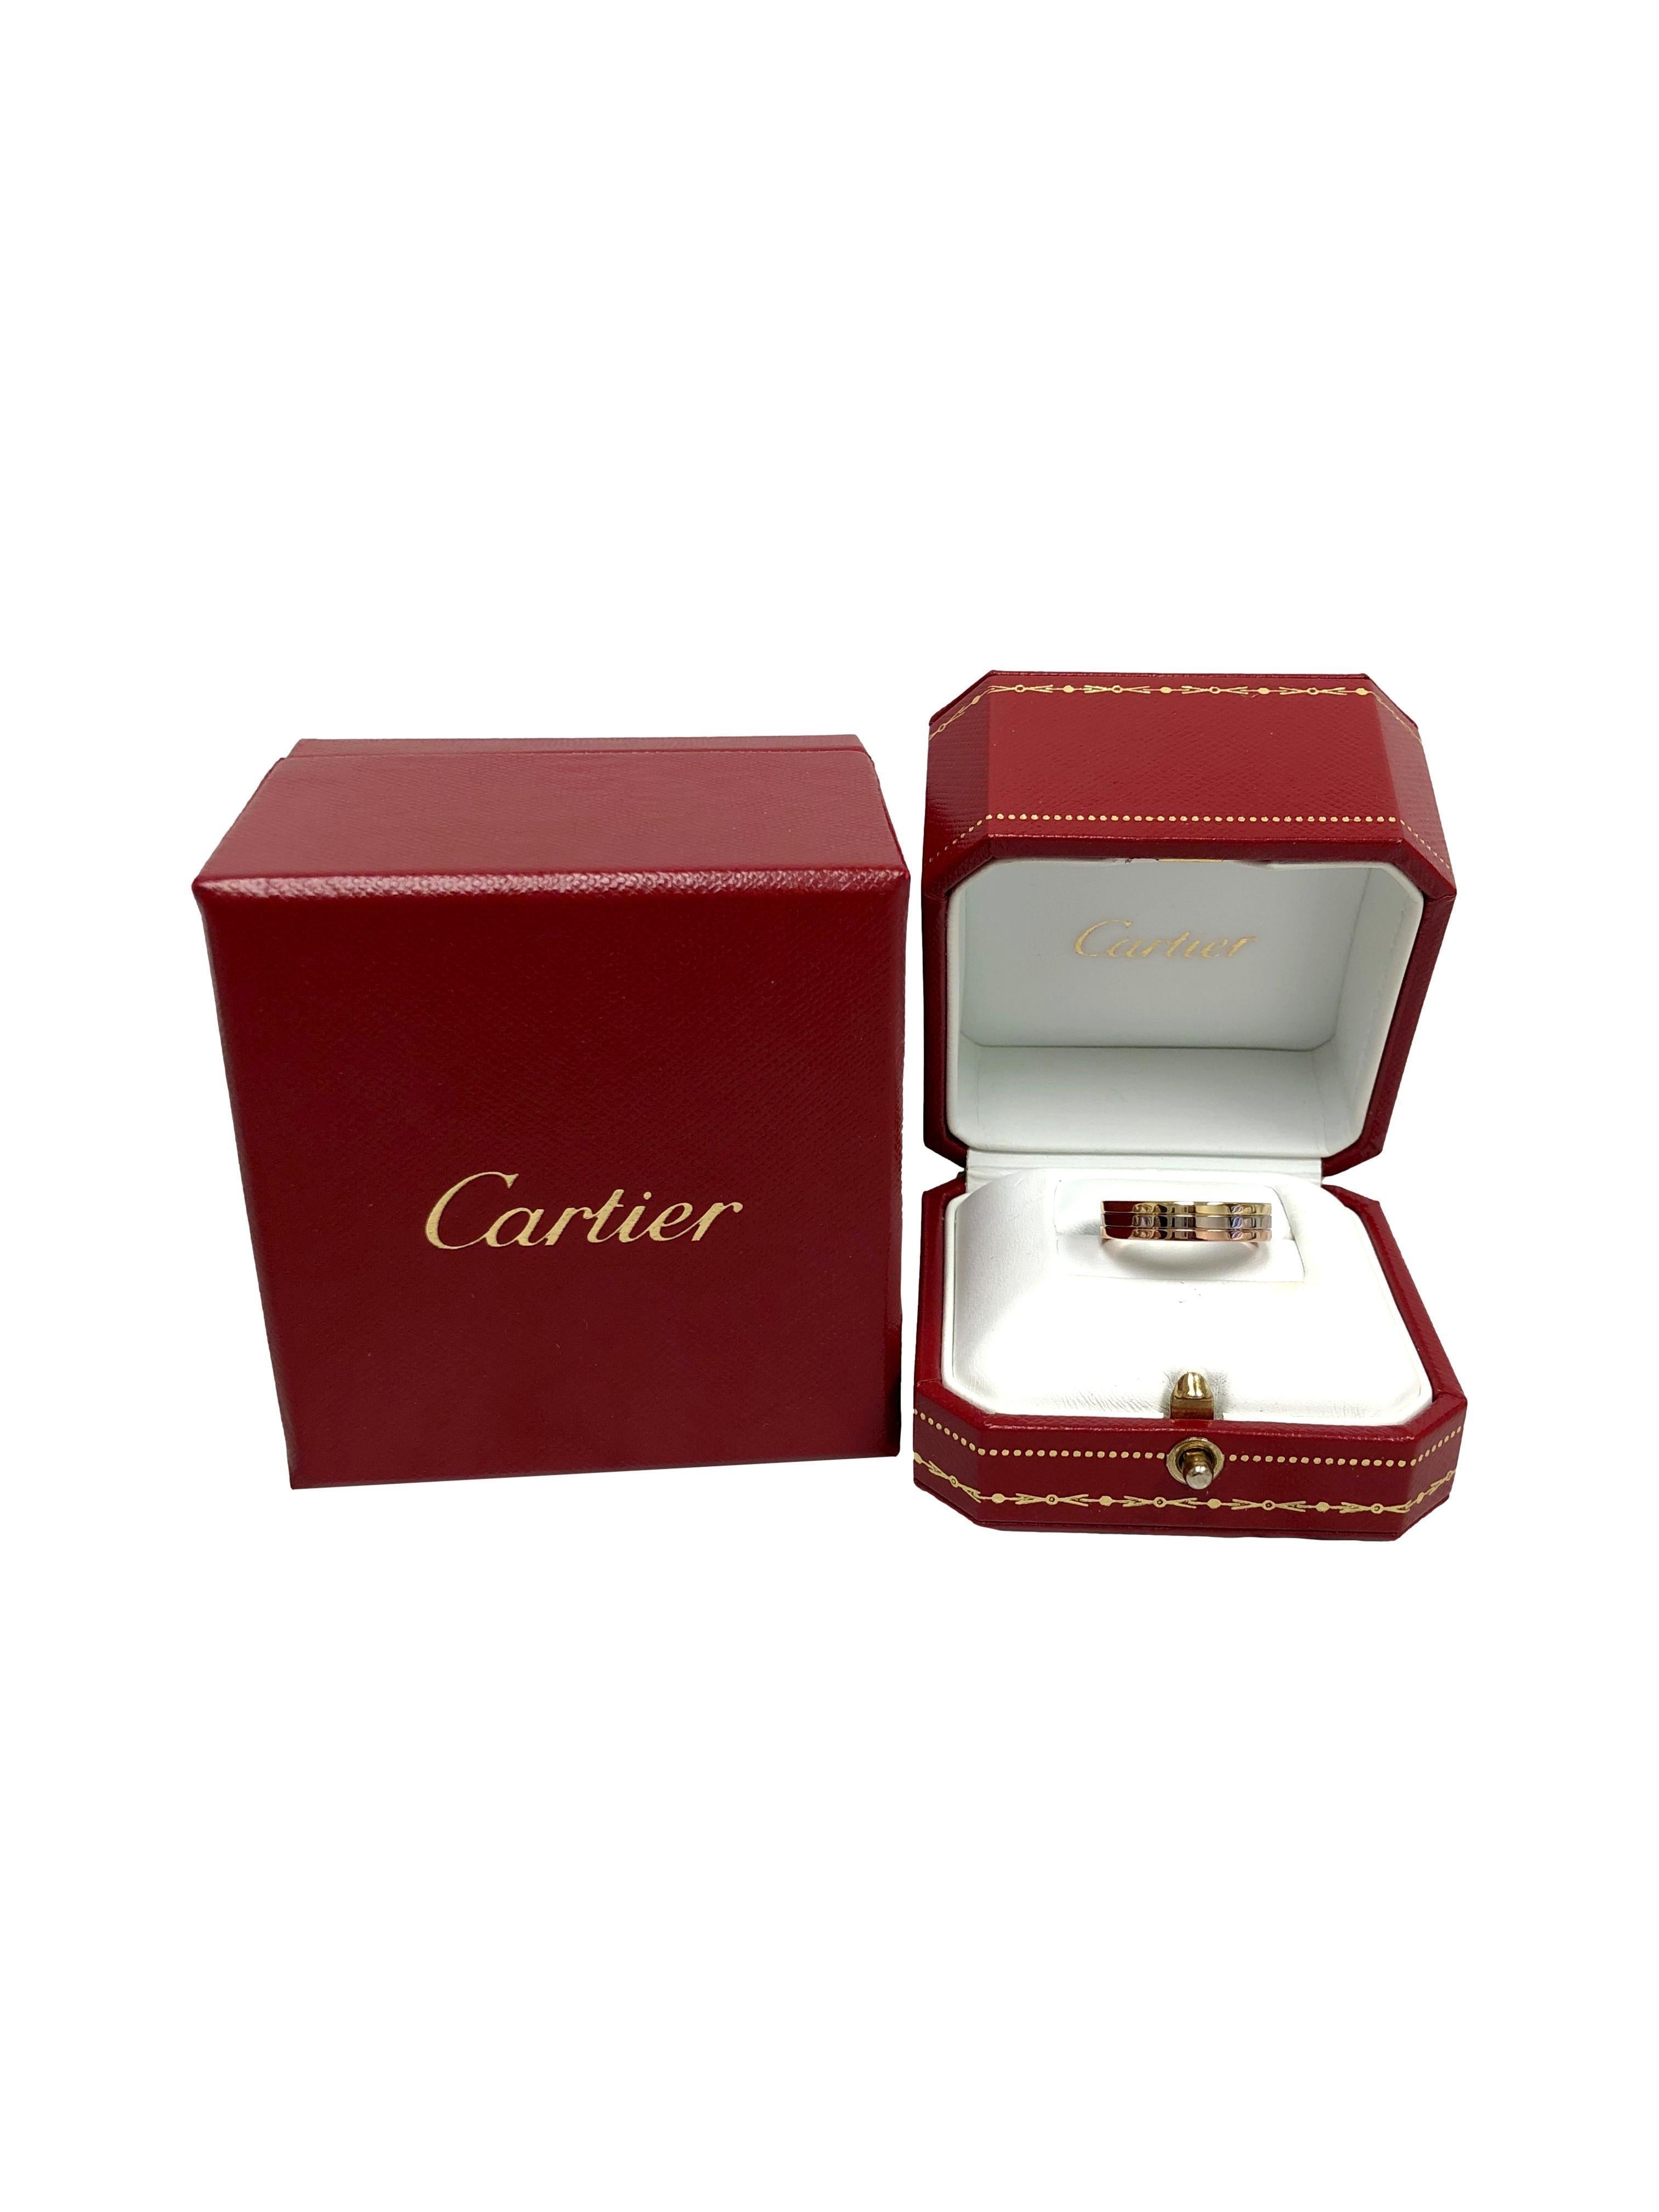 Vendome Louis Cartier 18K 3 Tone Gold Men's Wedding Band Ring Size 56/7.5 4.8mm For Sale 3